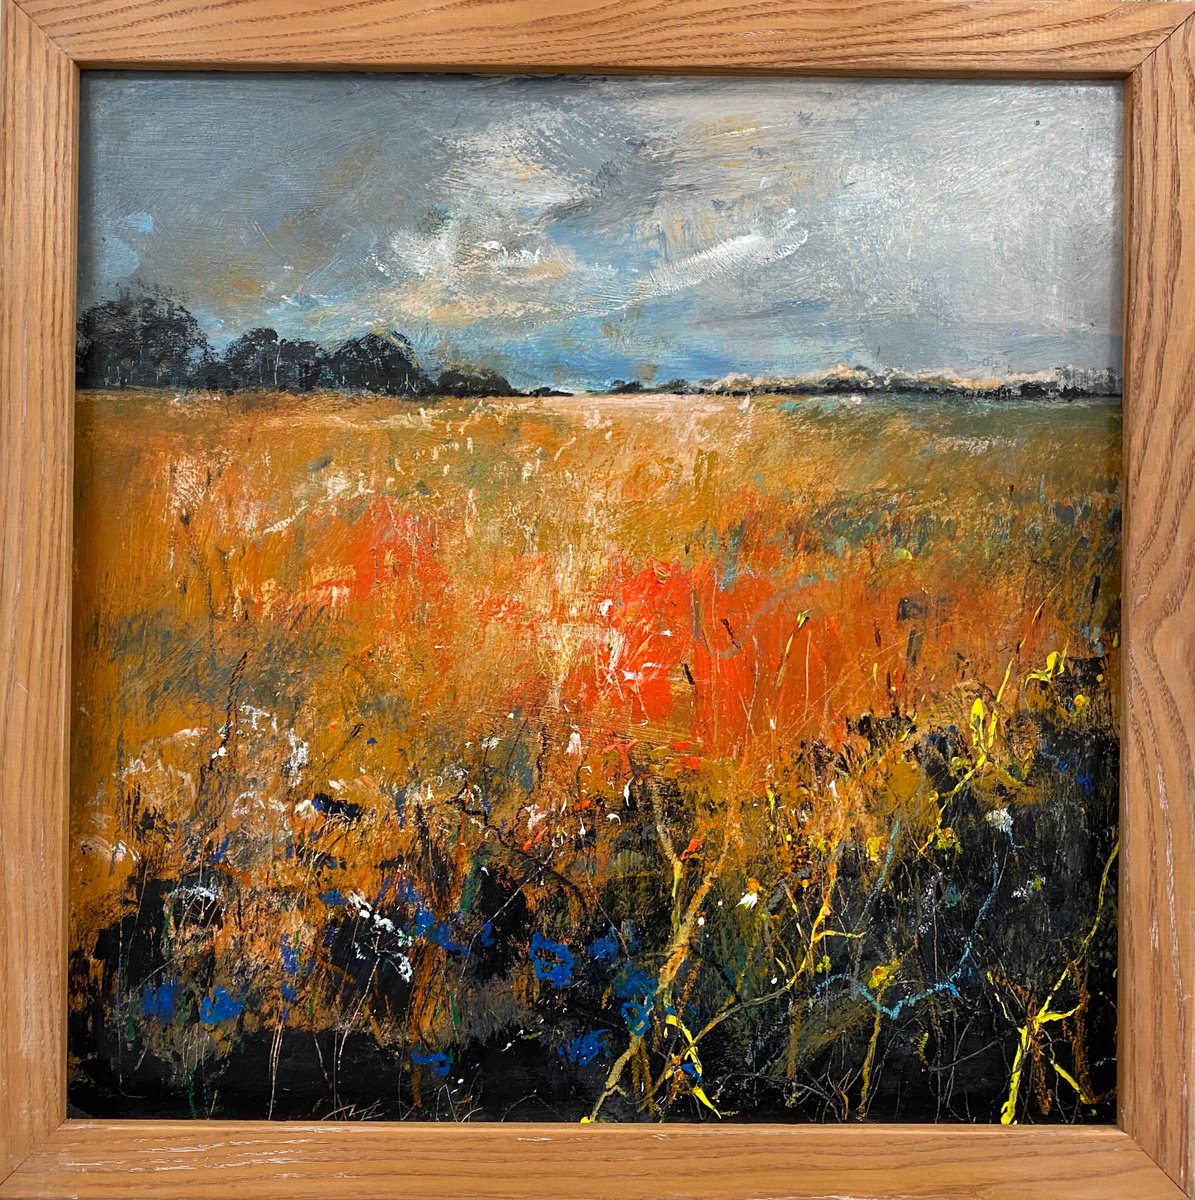 Orange Field with blue cornflowers (framed) by Teresa Tanner